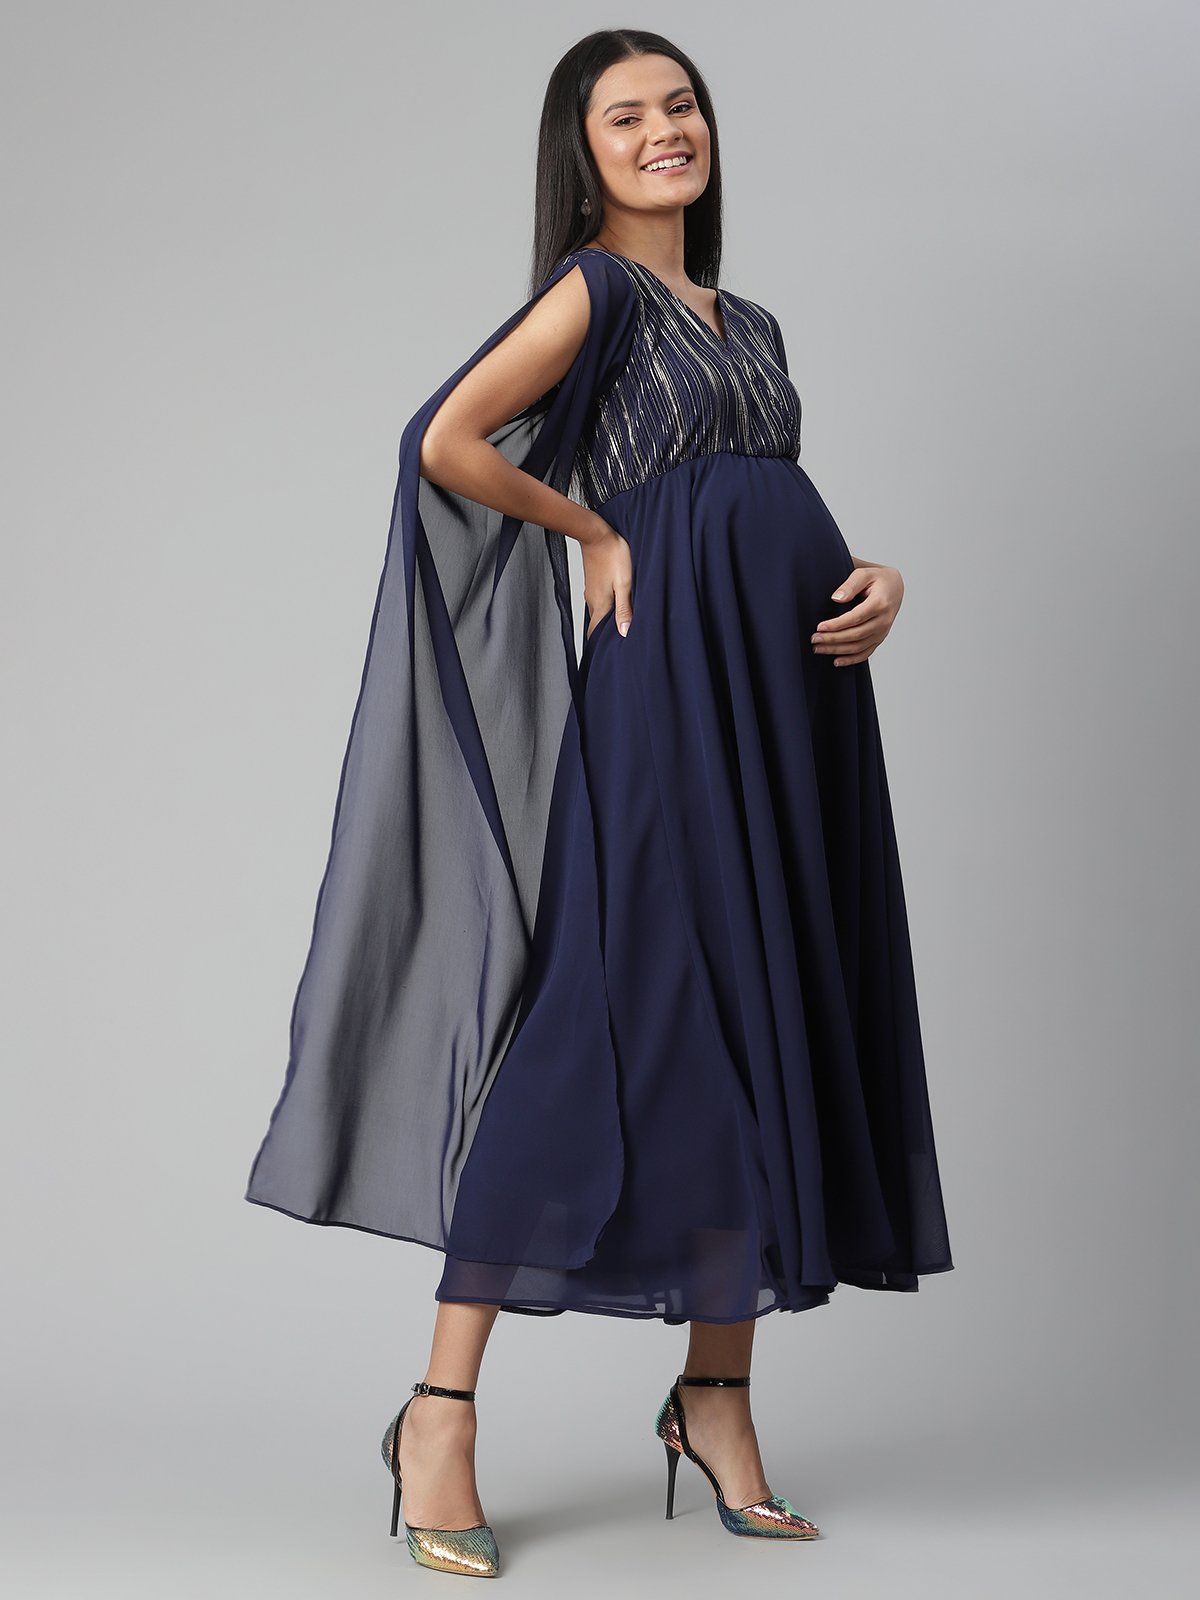 CLEARANCE *New* Maternity & Feeding Summer Dress in Navy LAST ONE SIZES XXL